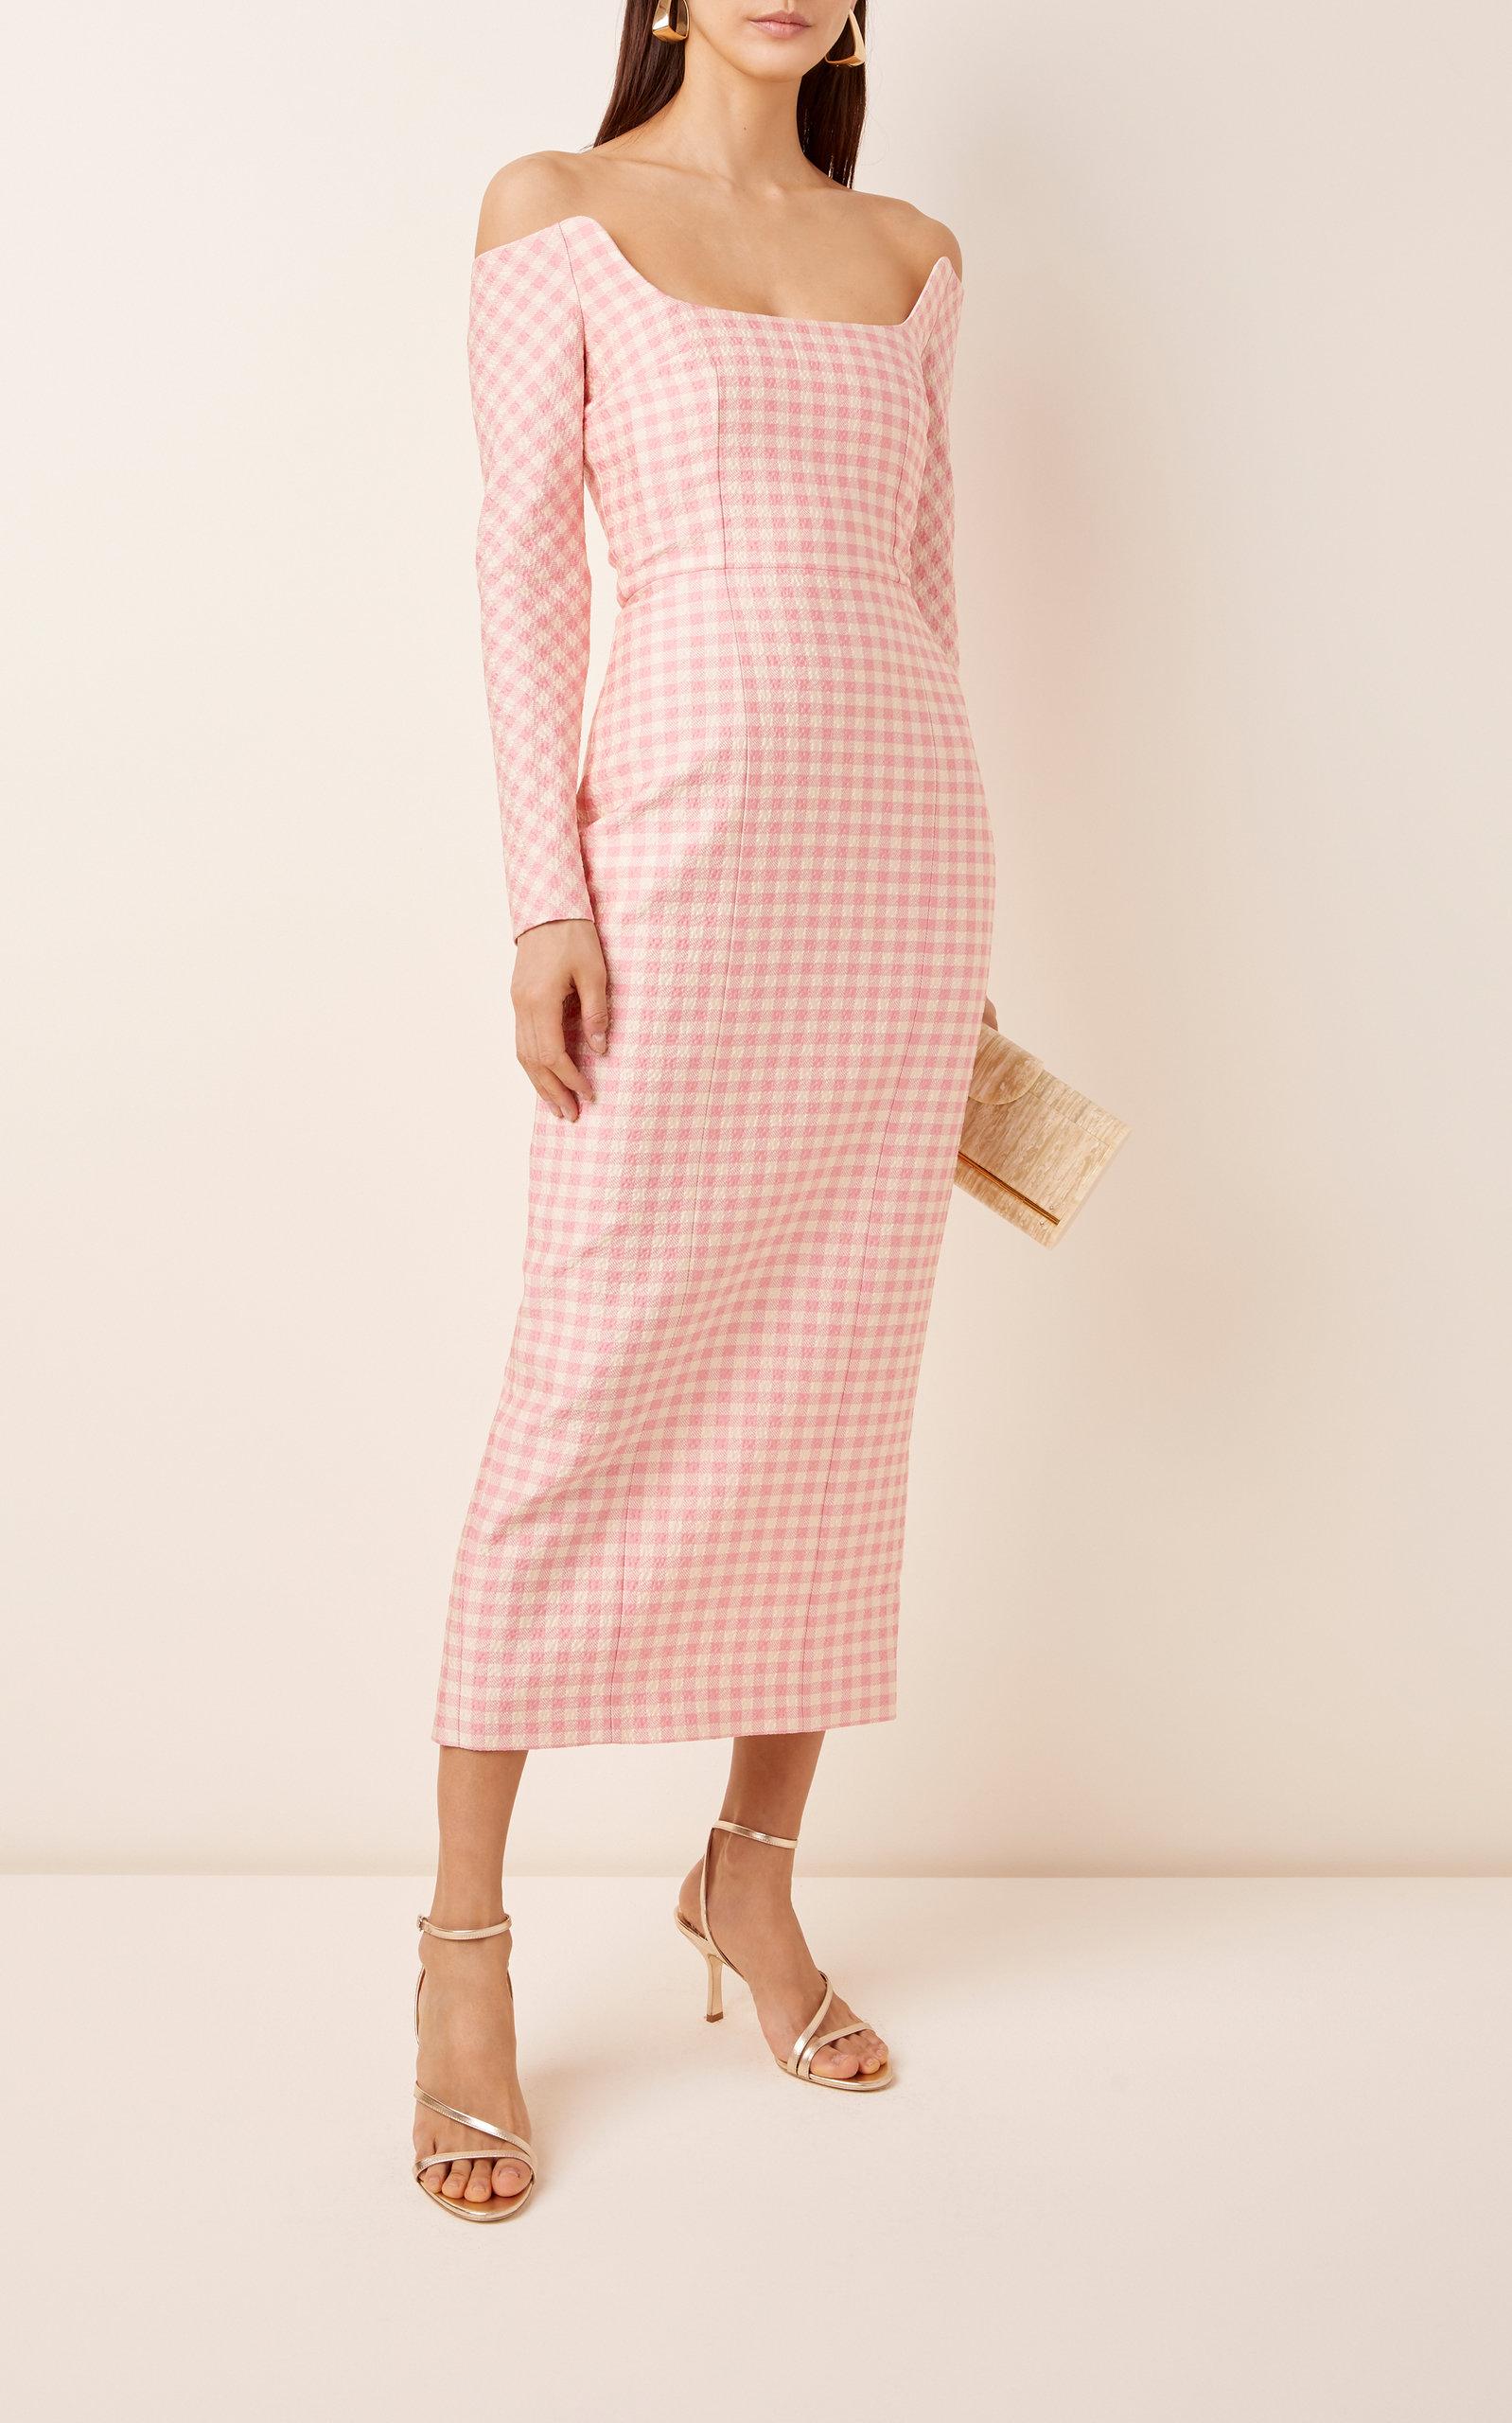 Emilia Wickstead Pink dress | Dresses Images 2022